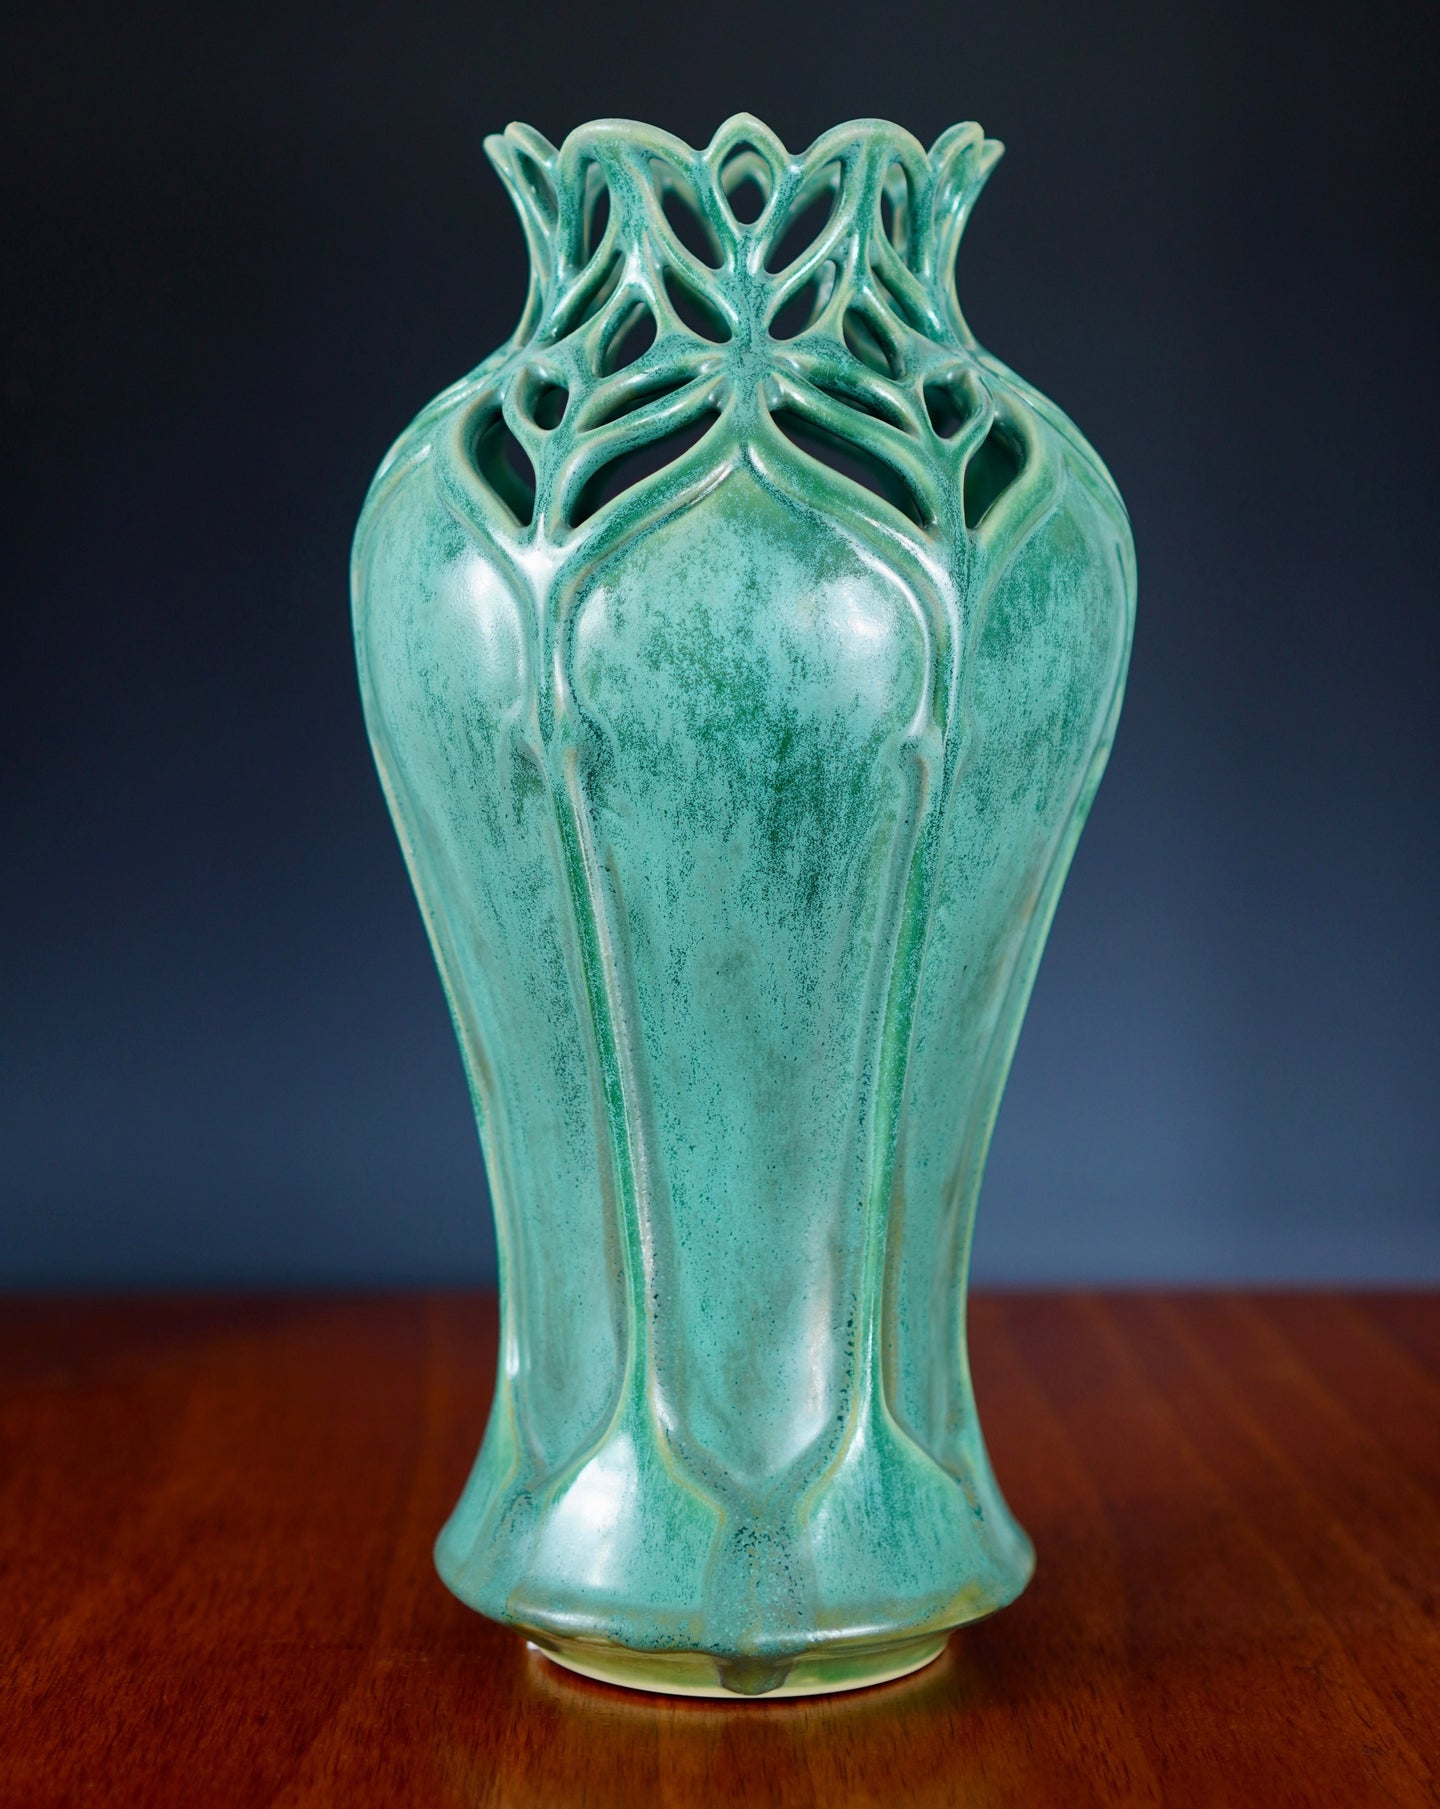 008 Craftsman Vase 2